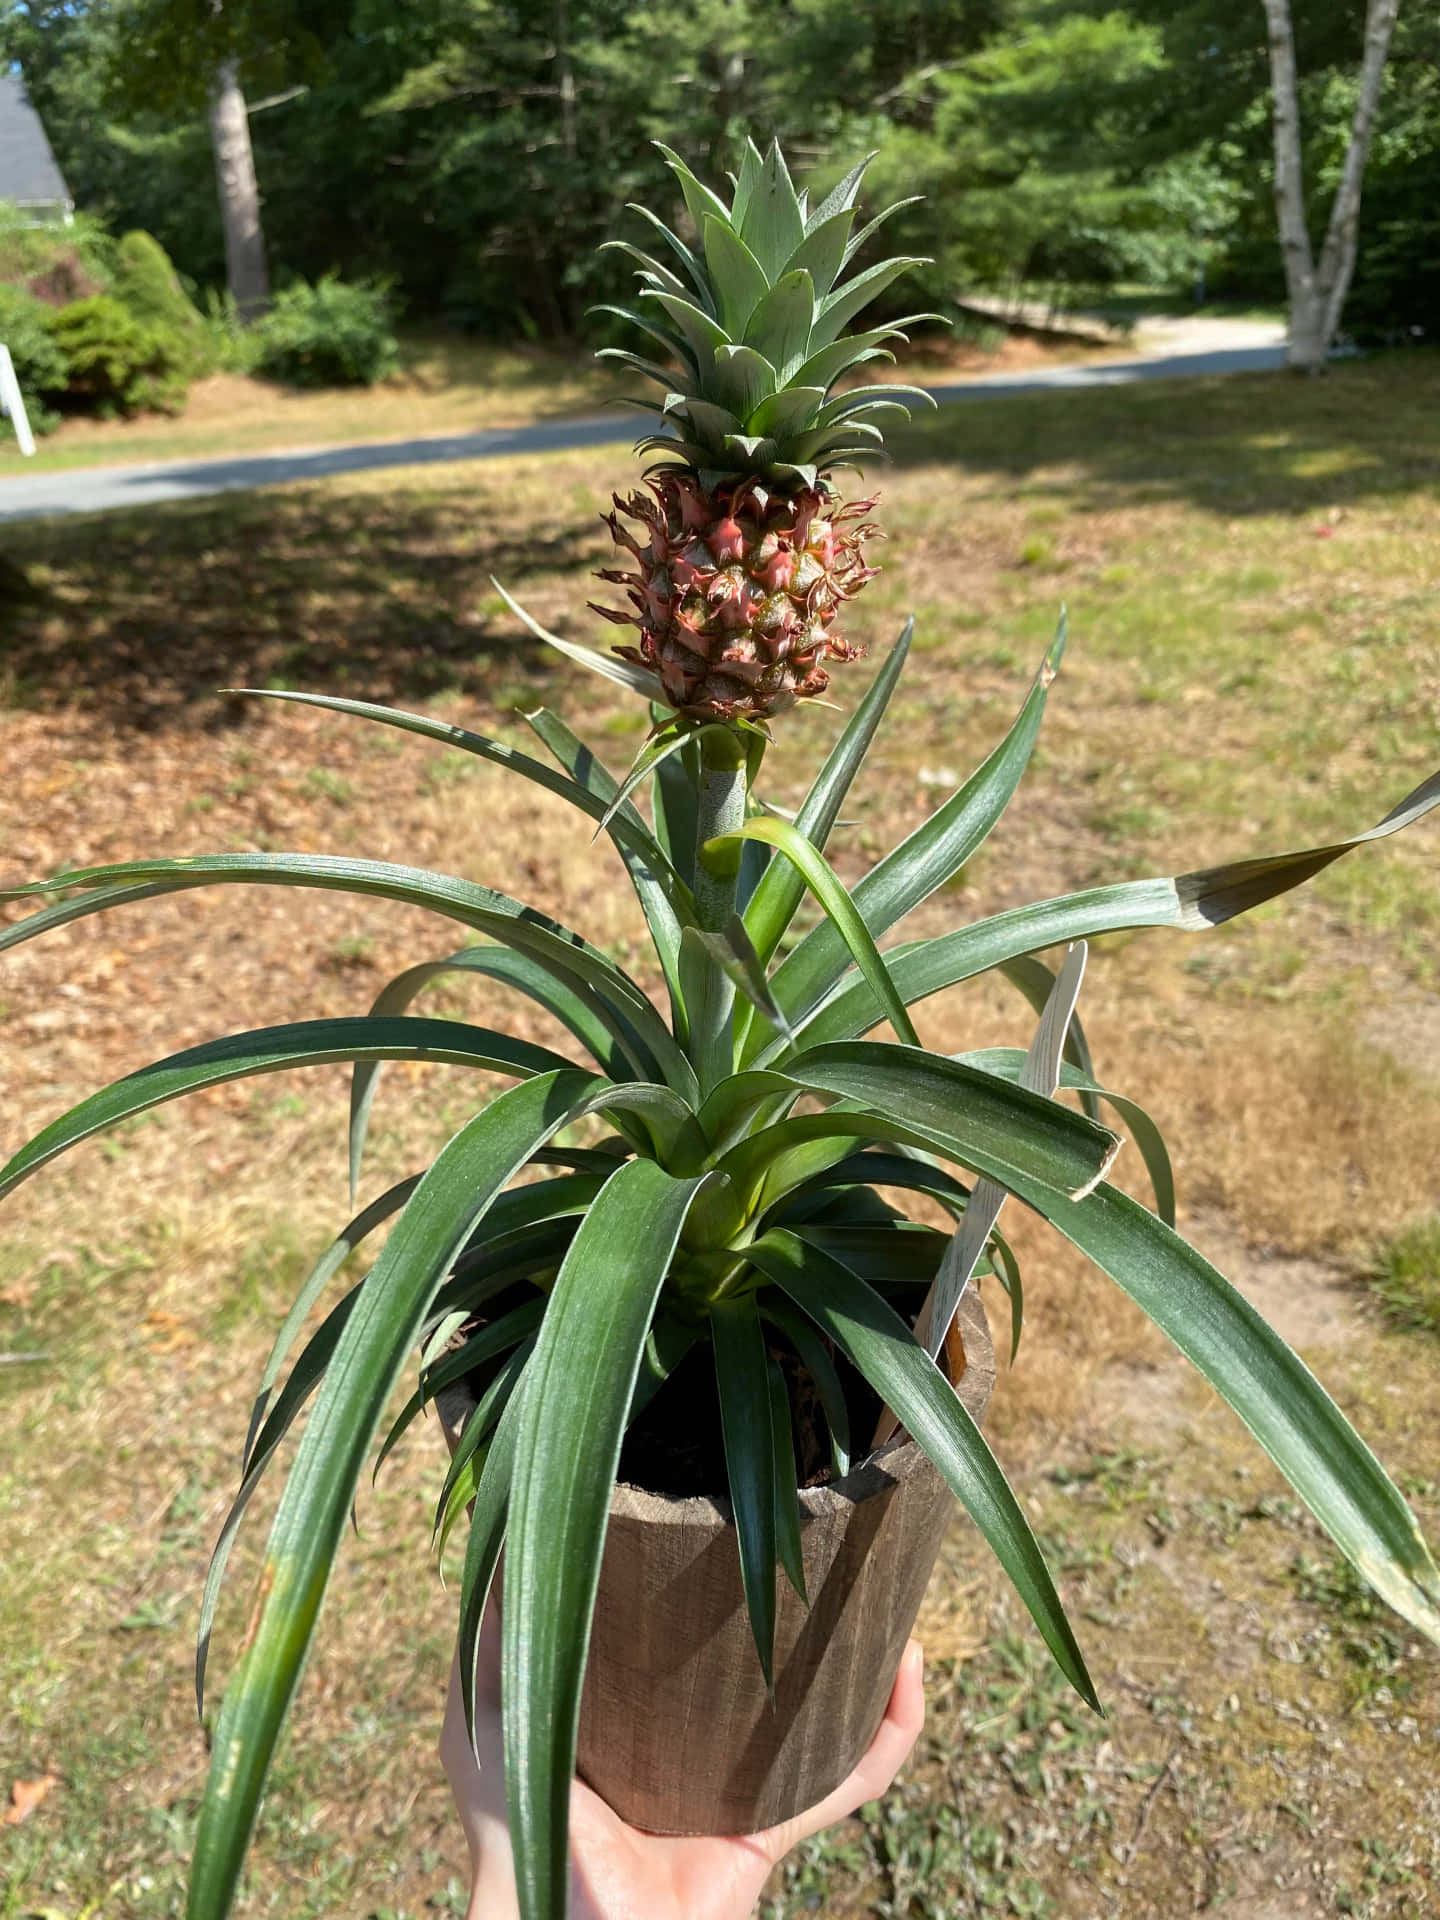 Vibrant Pineapple Plant Thriving in Natural Habitat